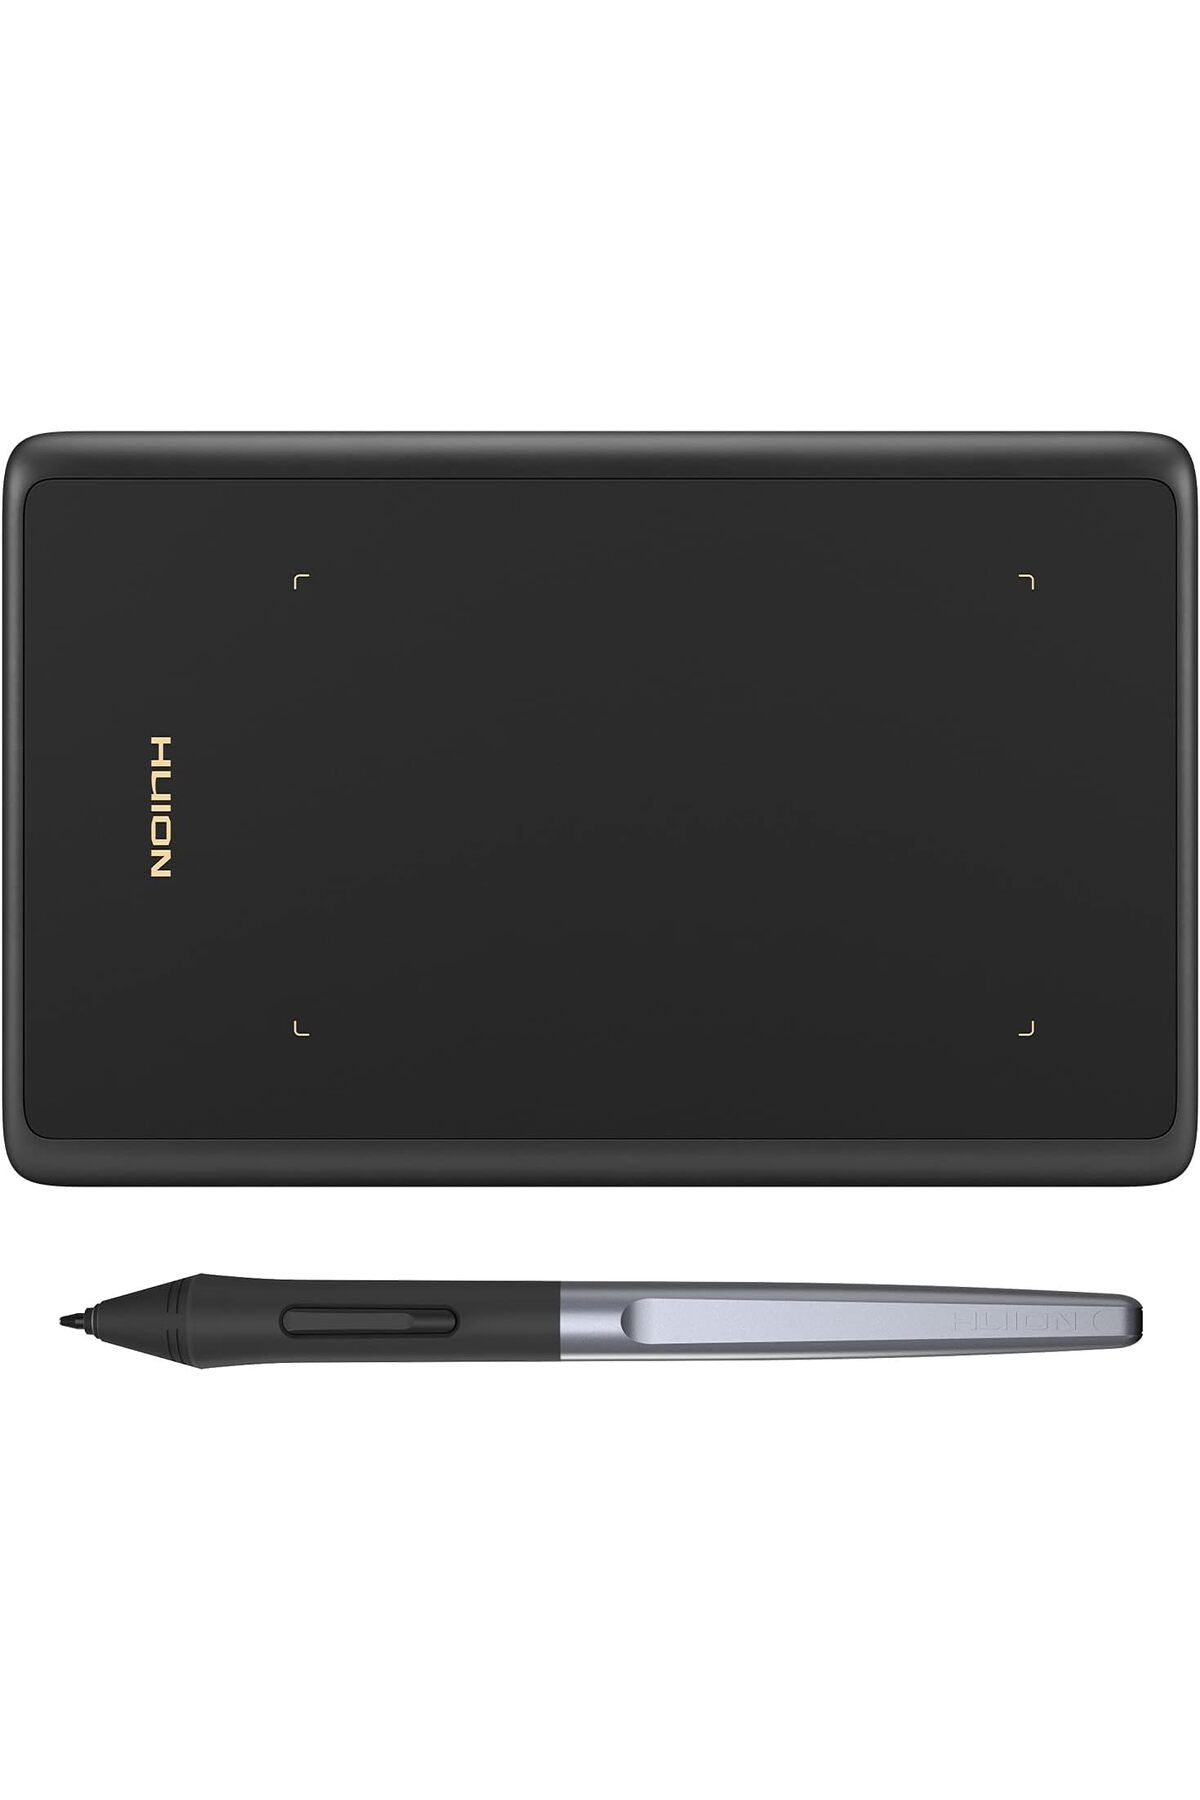 Huion H420X OSU Tablet Grafik Çizim Tableti - Dijital Kalem